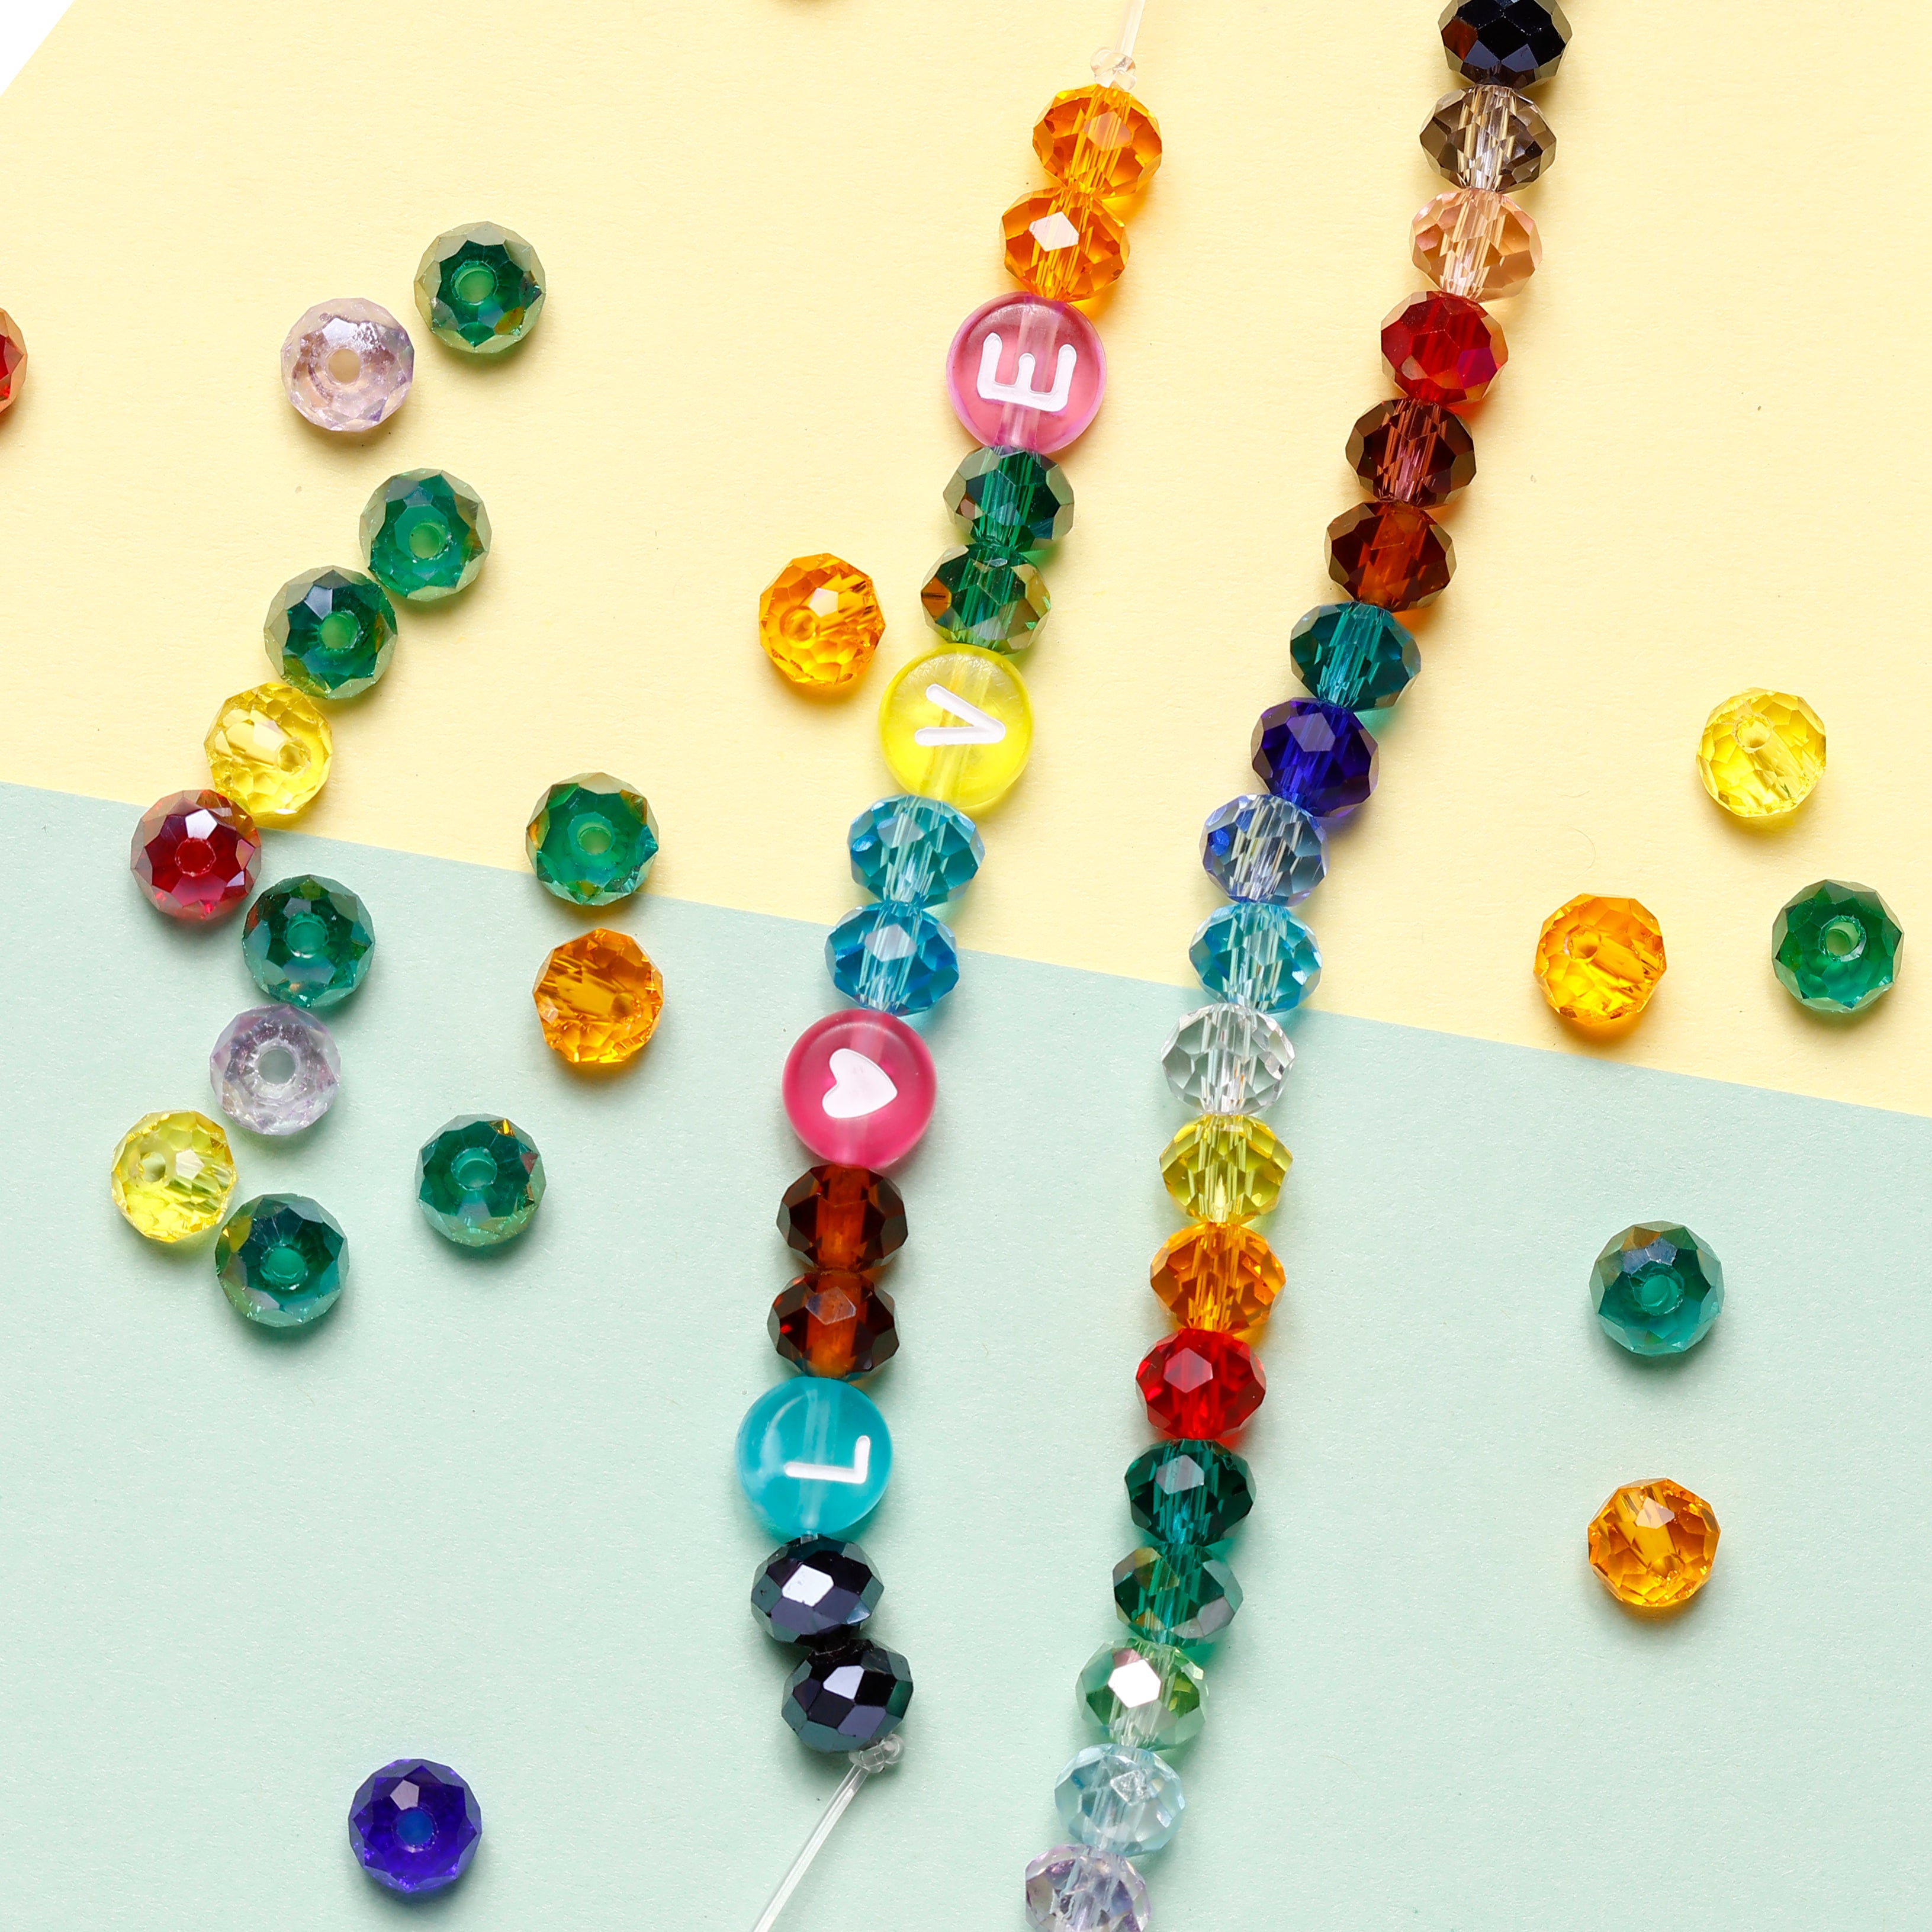 7 Stunning Crystal Bead DIY Crafts – Incraftables